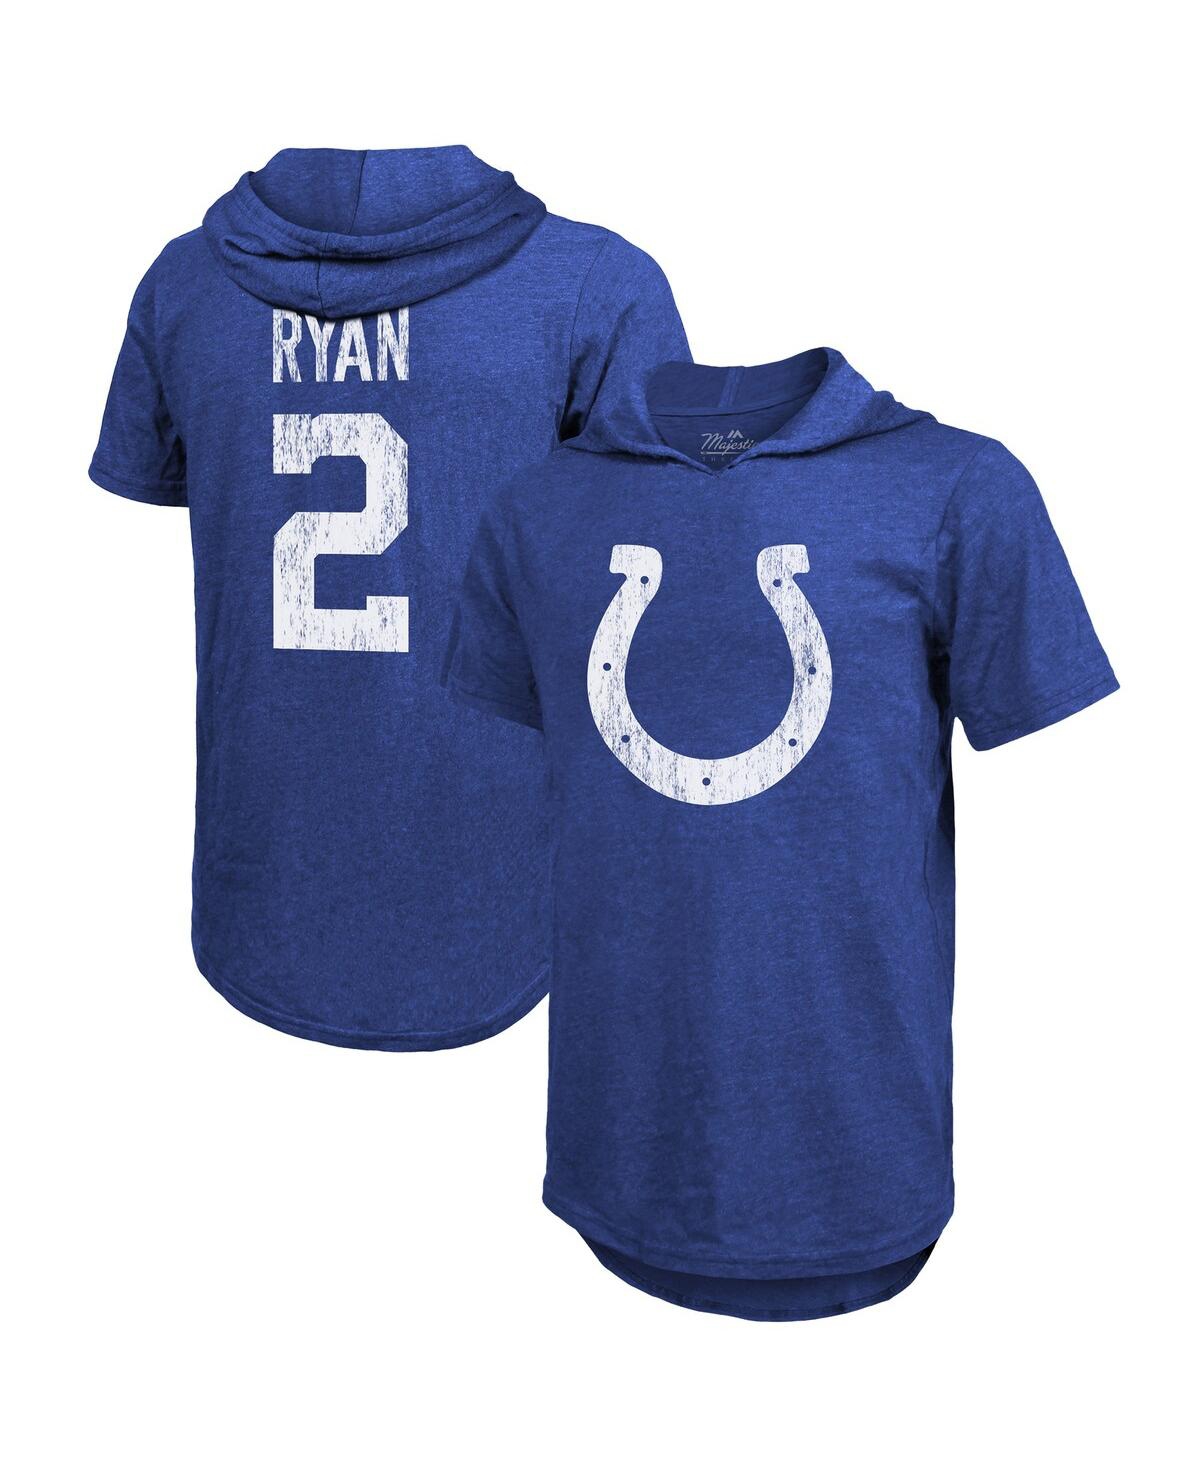 Men's Majestic Threads Matt Ryan Royal Indianapolis Colts Player Name & Number Short Sleeve Hoodie T-shirt - Royal